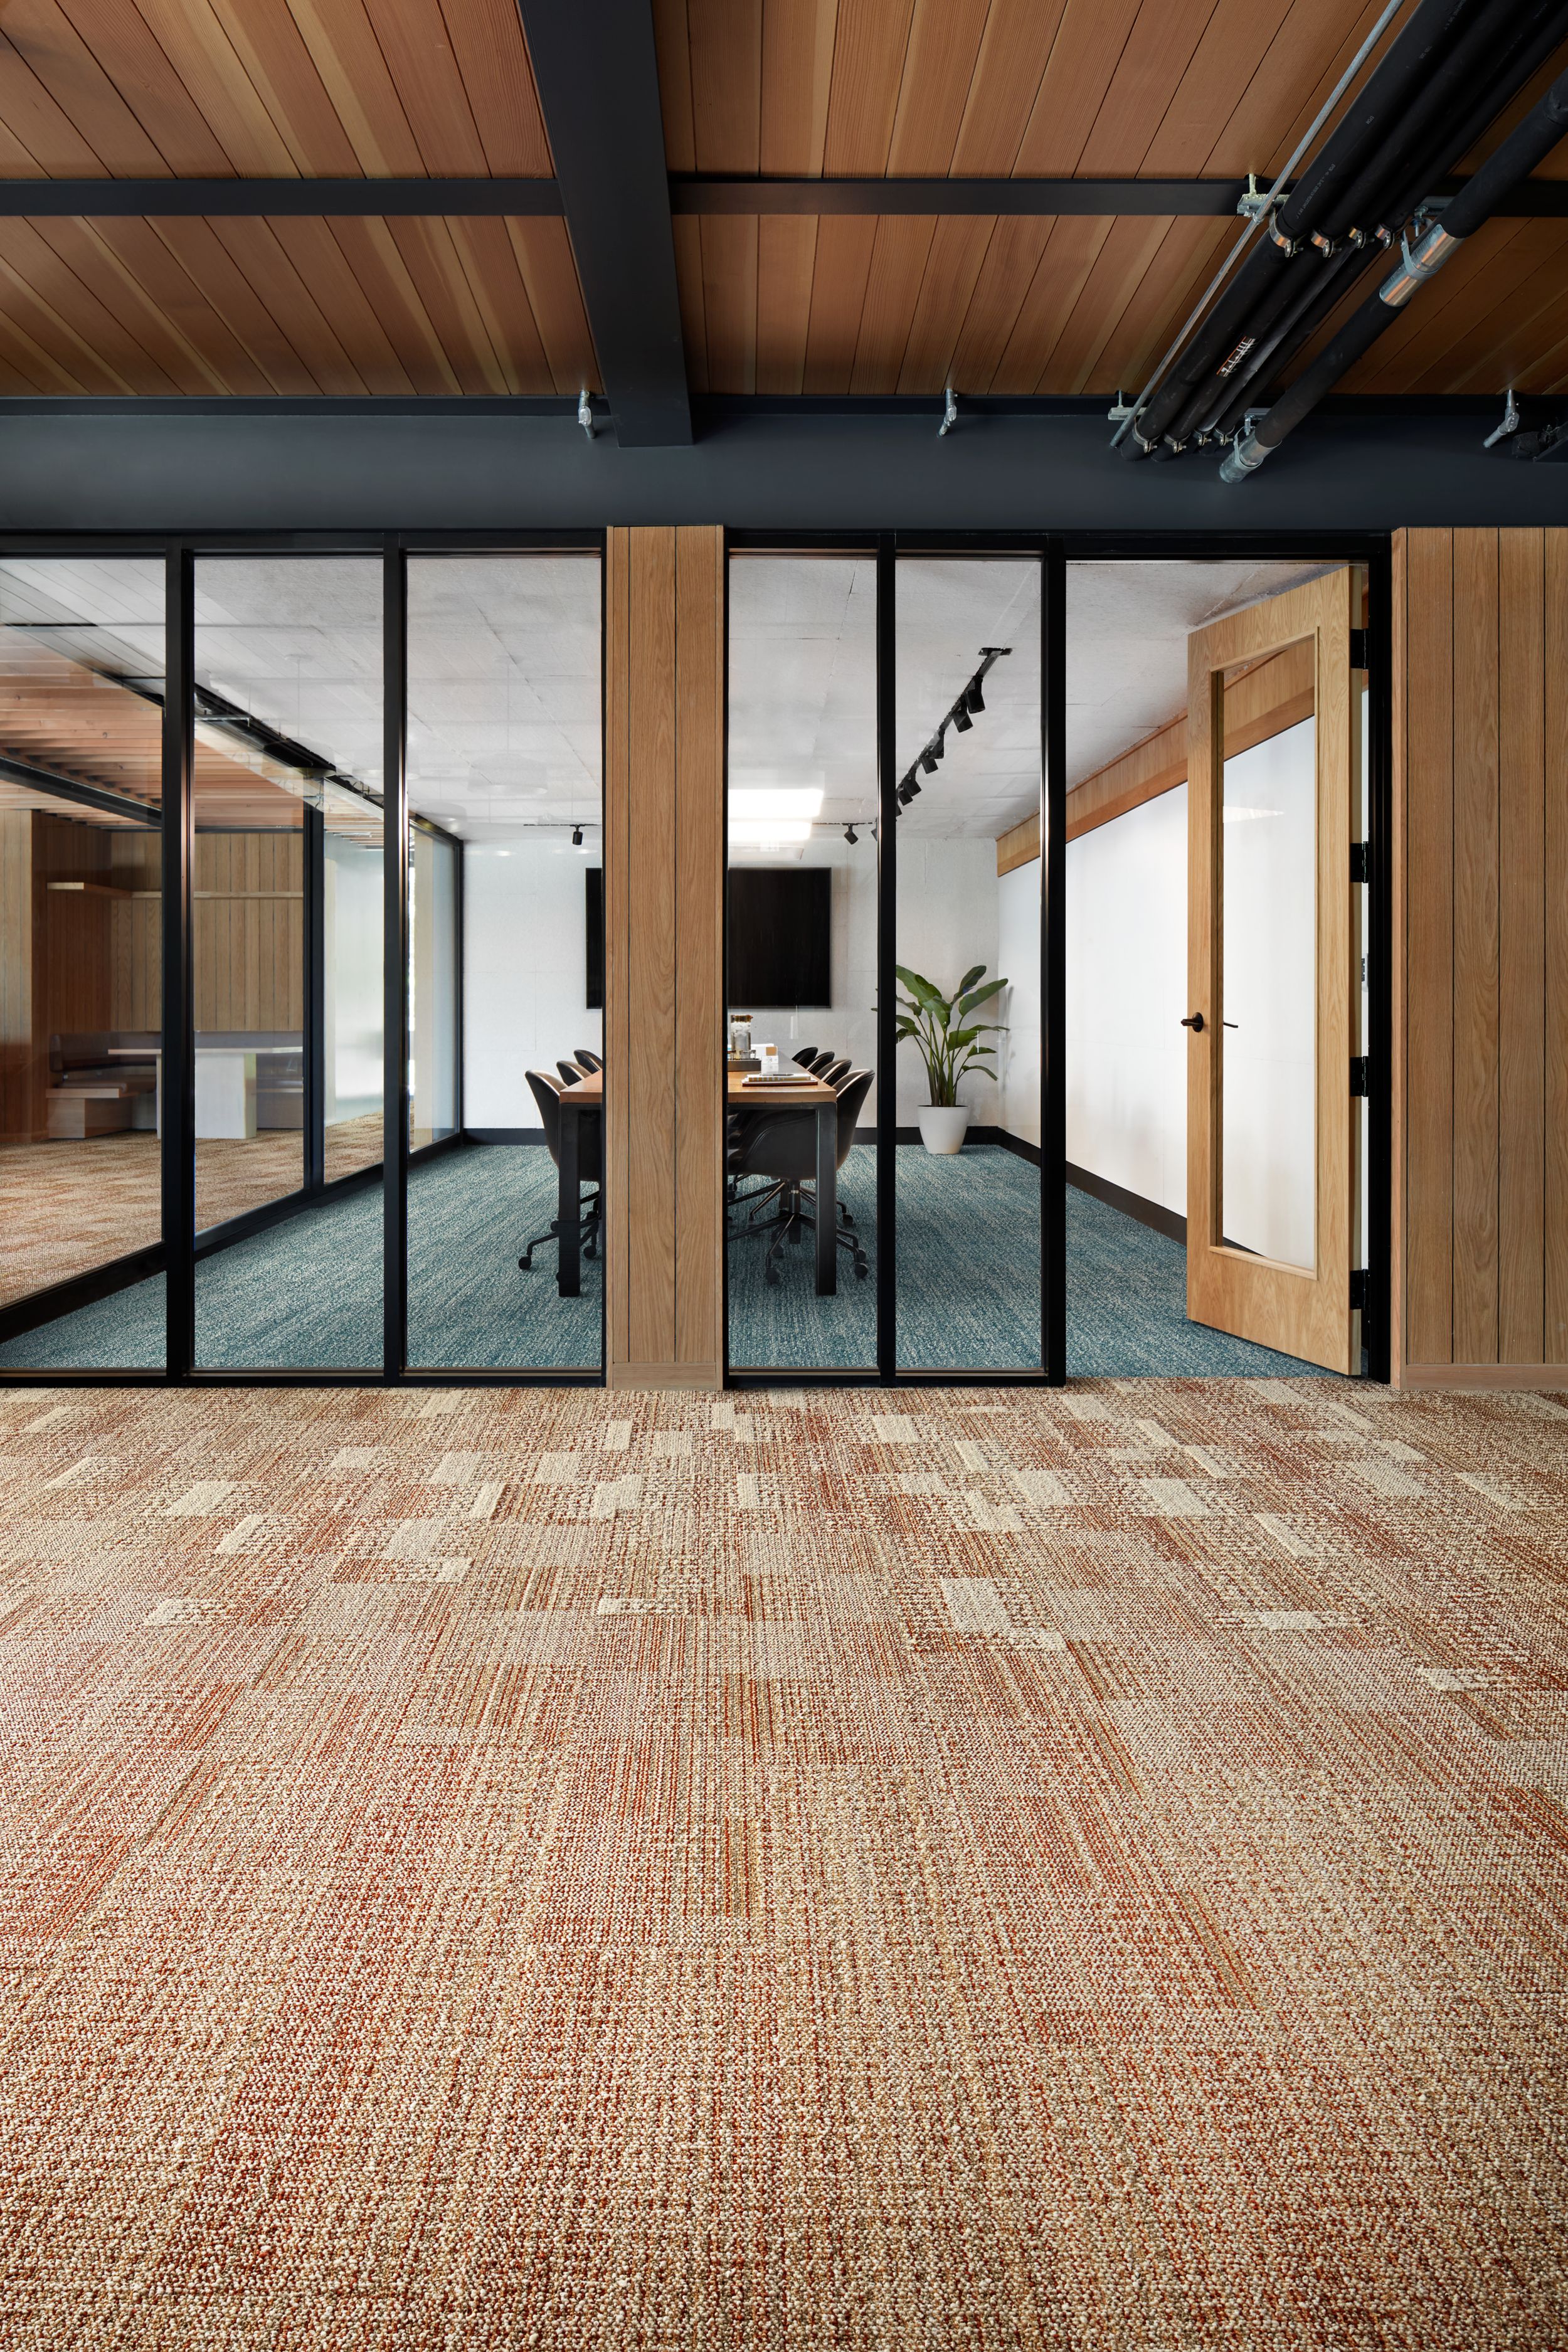 Interface Dot 2 Dot, Dot O-Mine and Diddley Dot plank carpet tile in meeting room imagen número 9